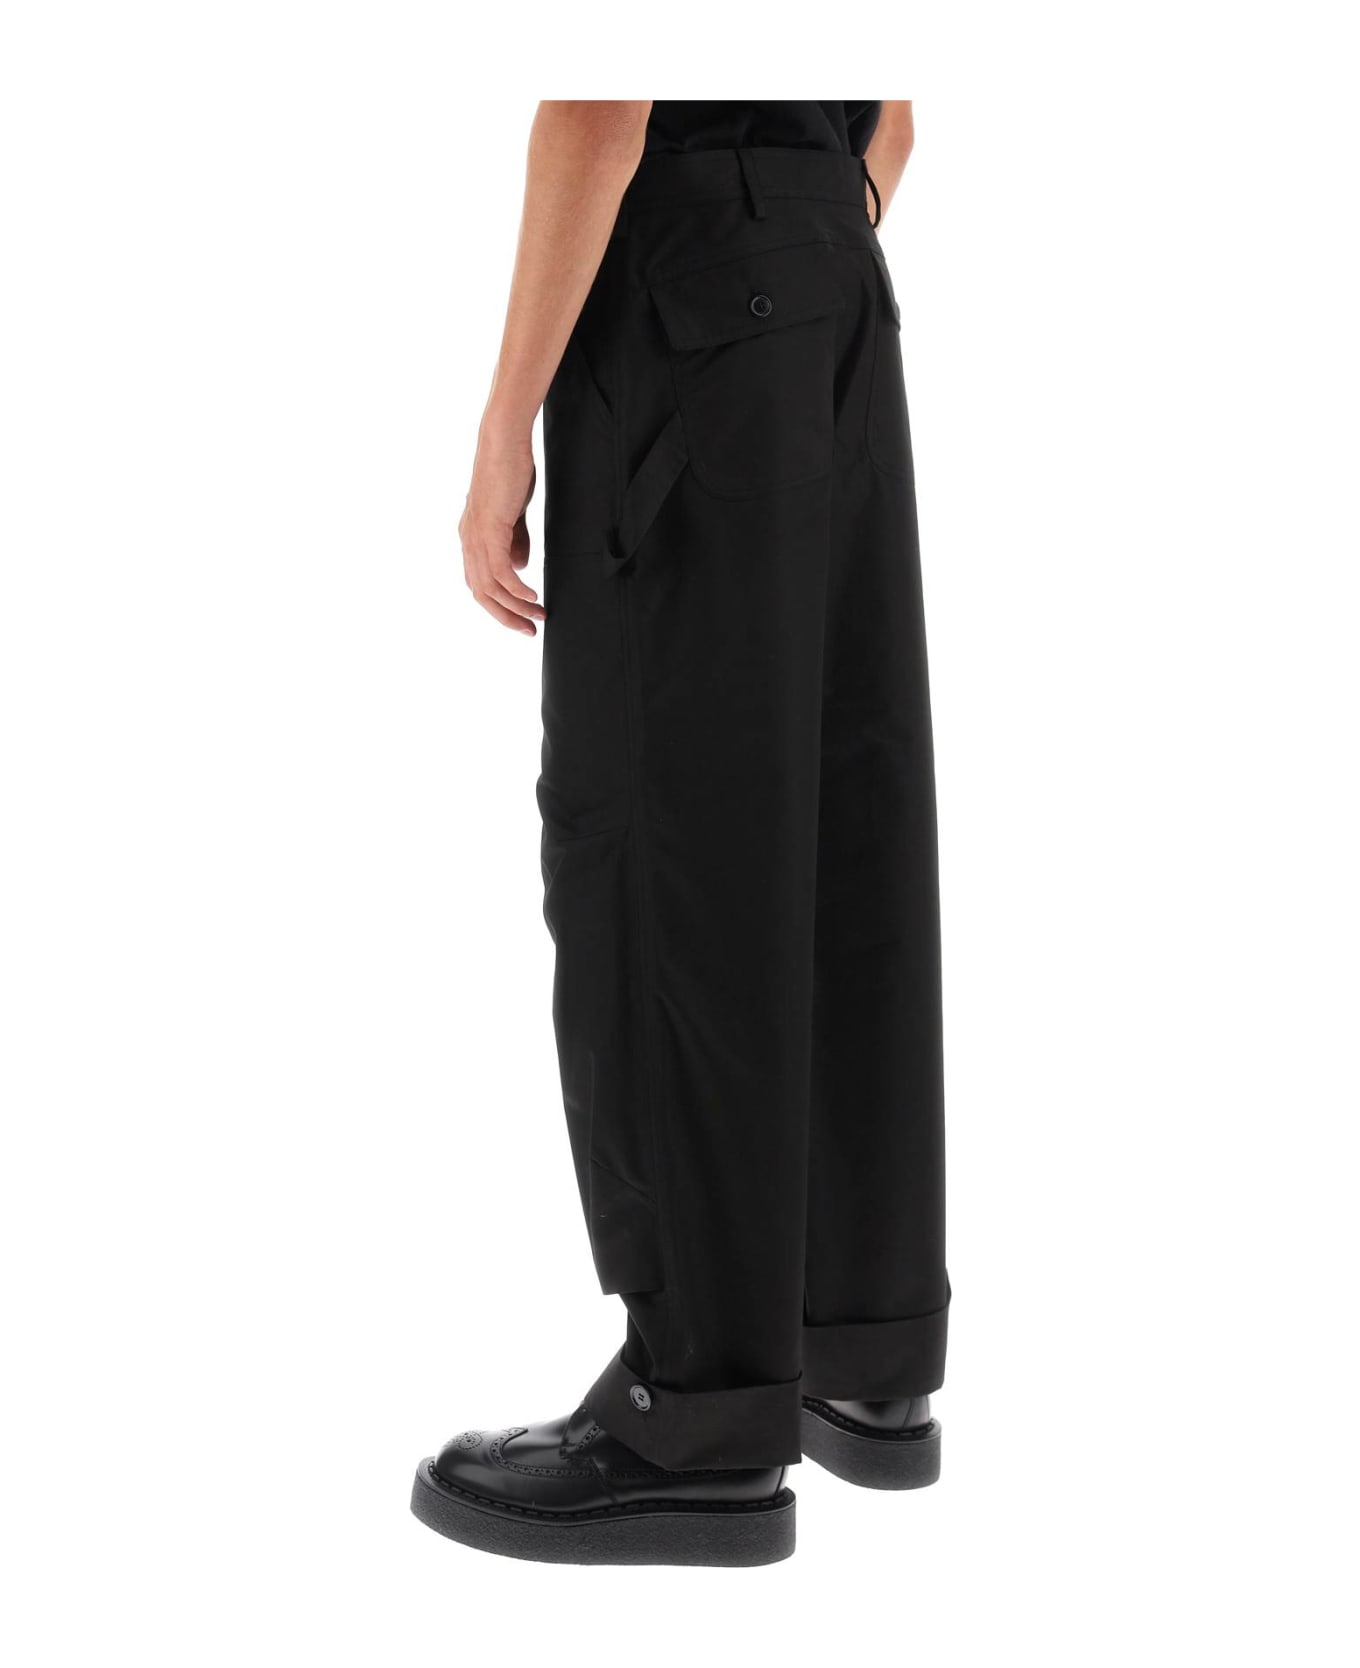 Simone Rocha Workwear Twill Pants - BLACK (Black)